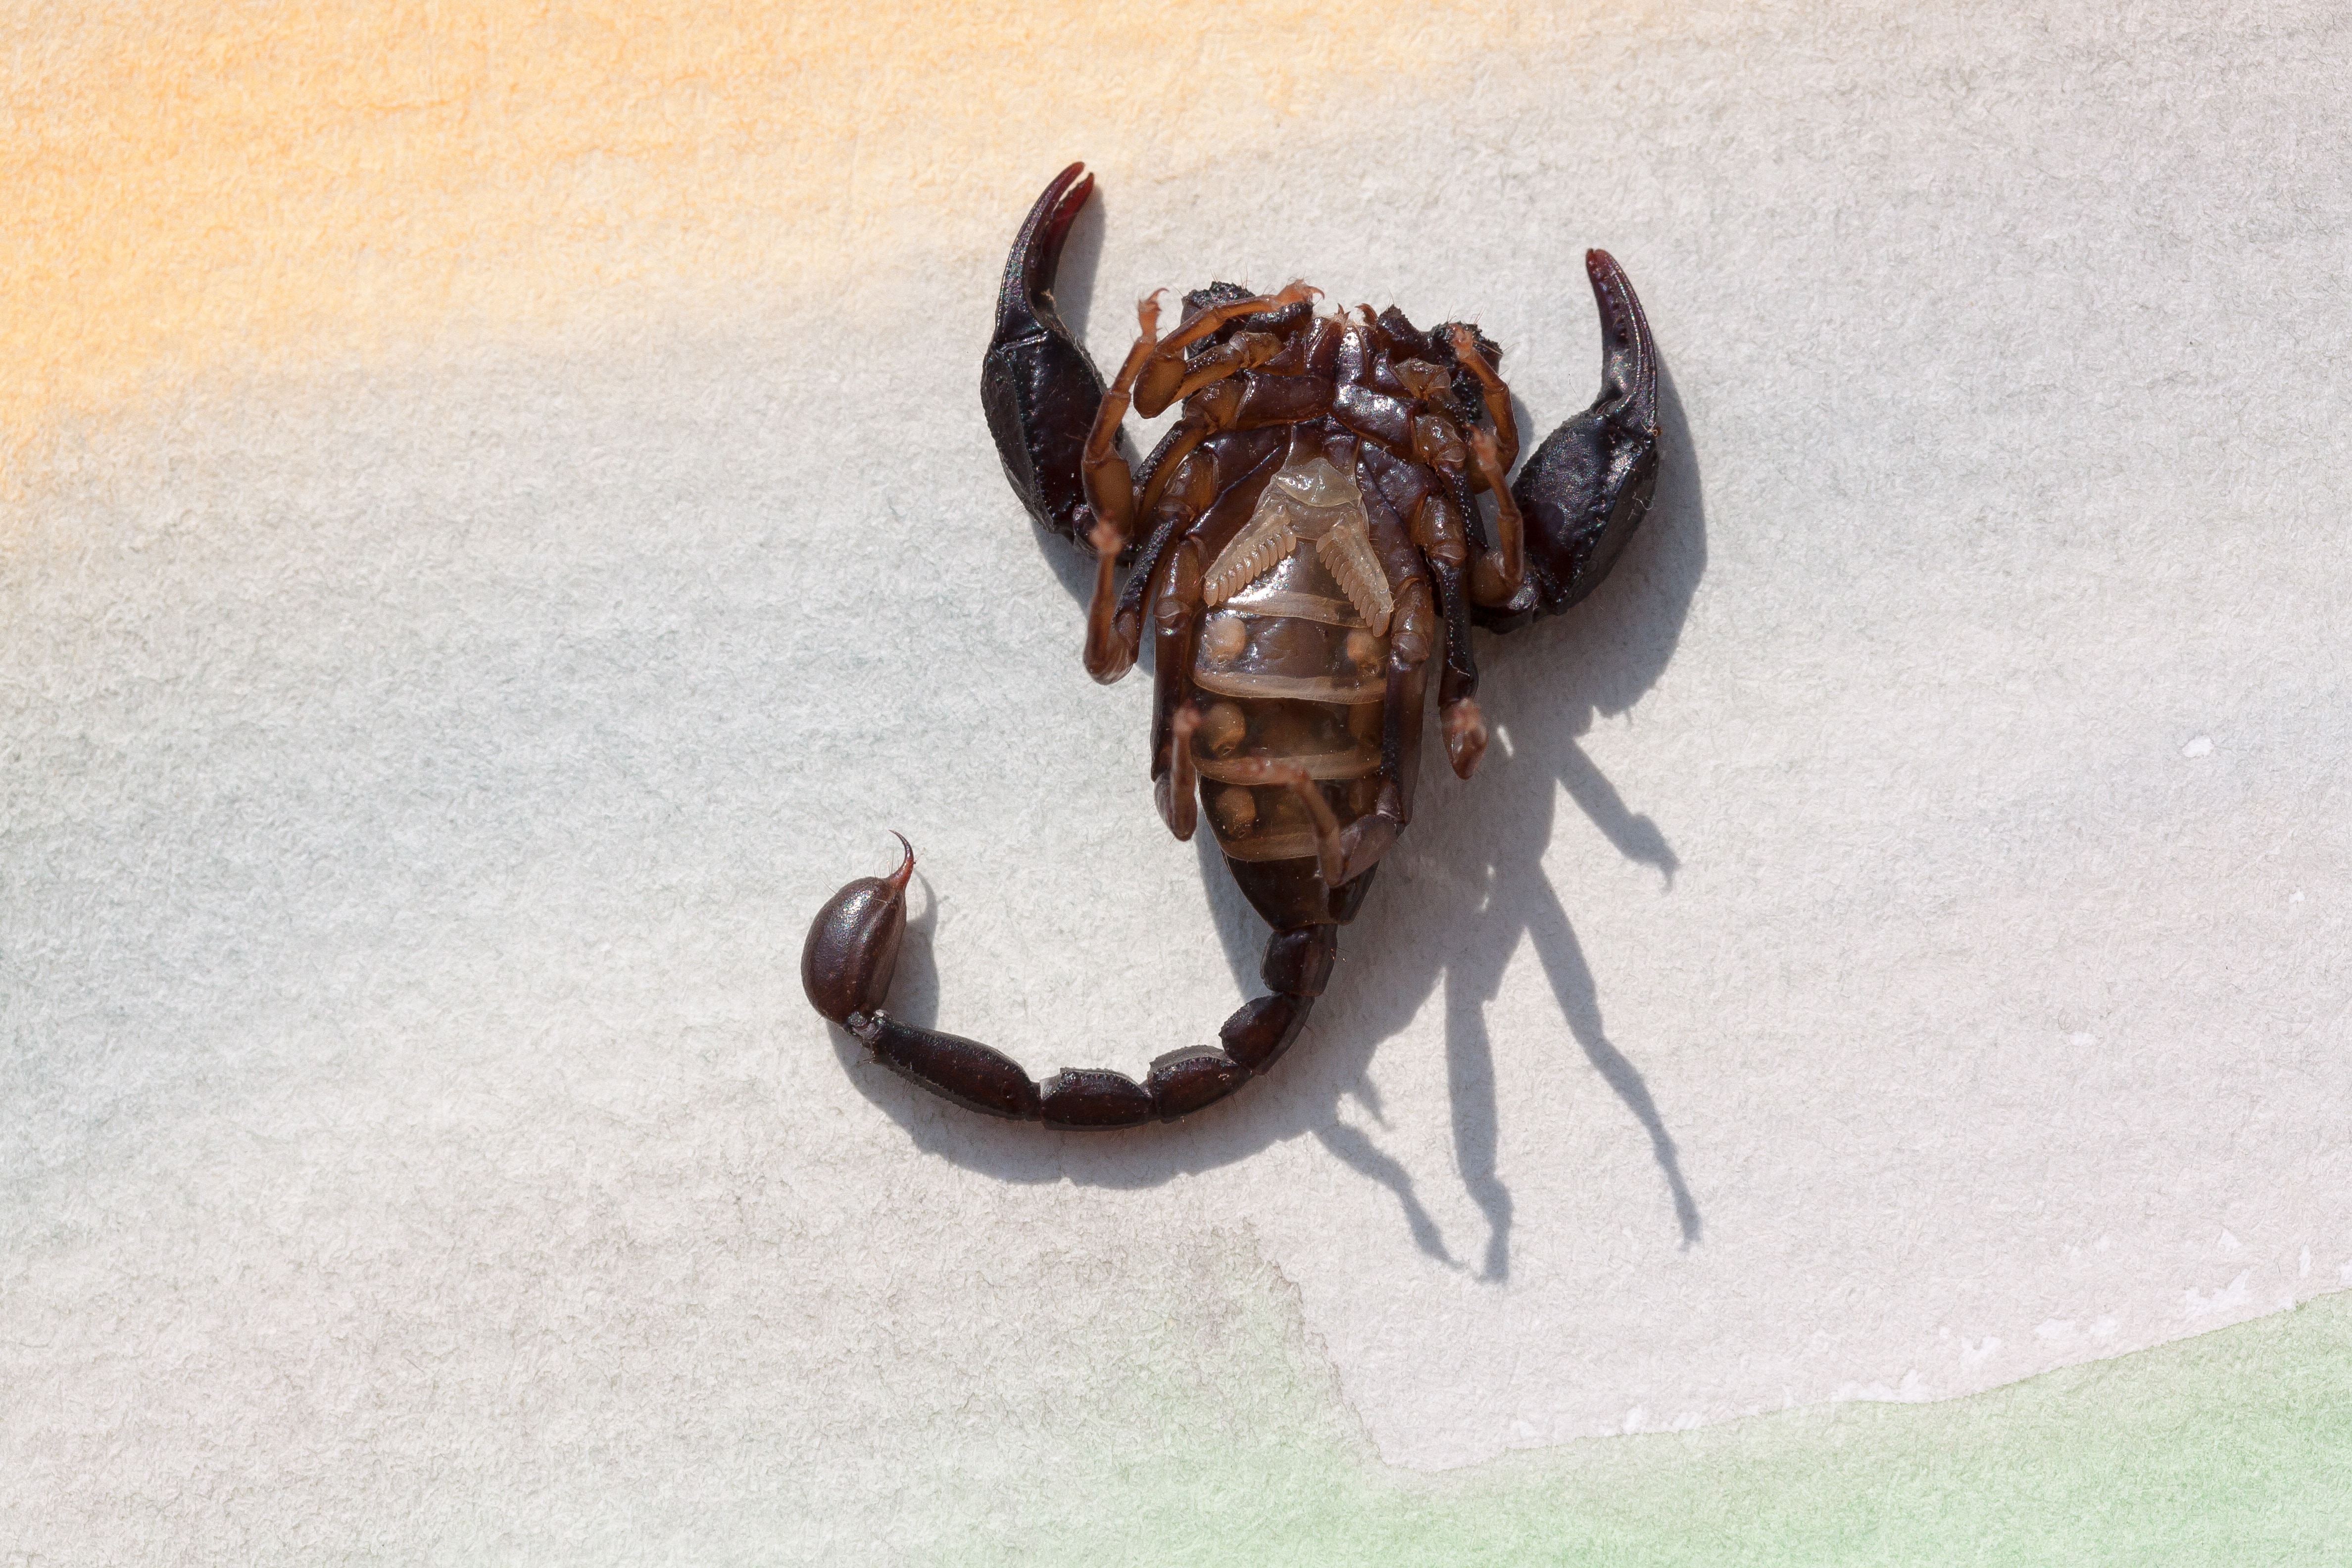 brown scorpion